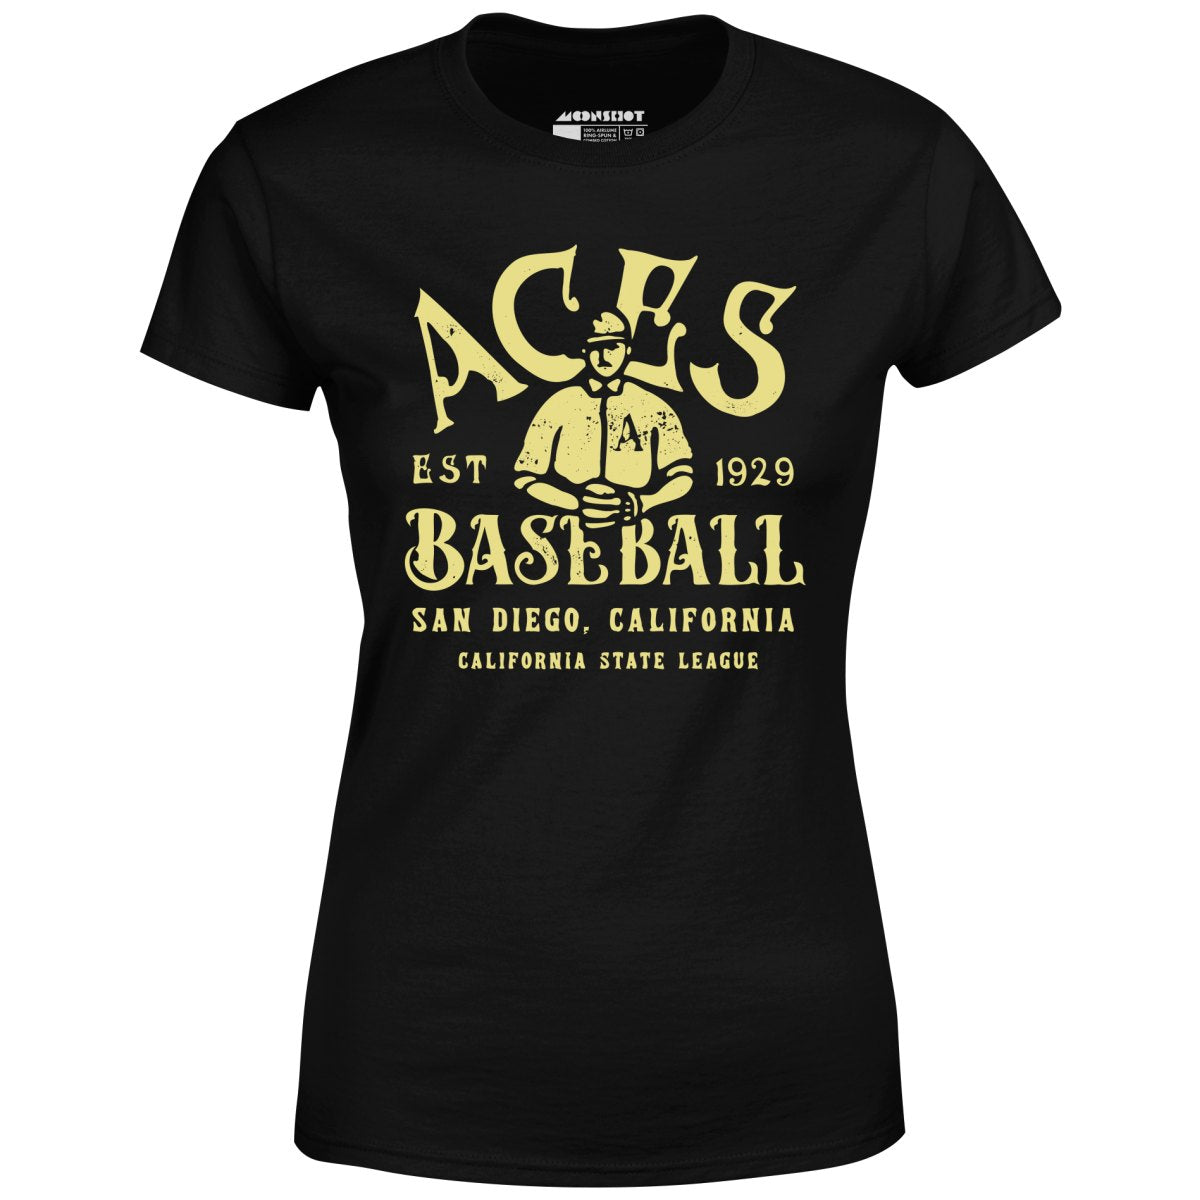 San Diego Aces - California - Vintage Defunct Baseball Teams - Women's T-Shirt